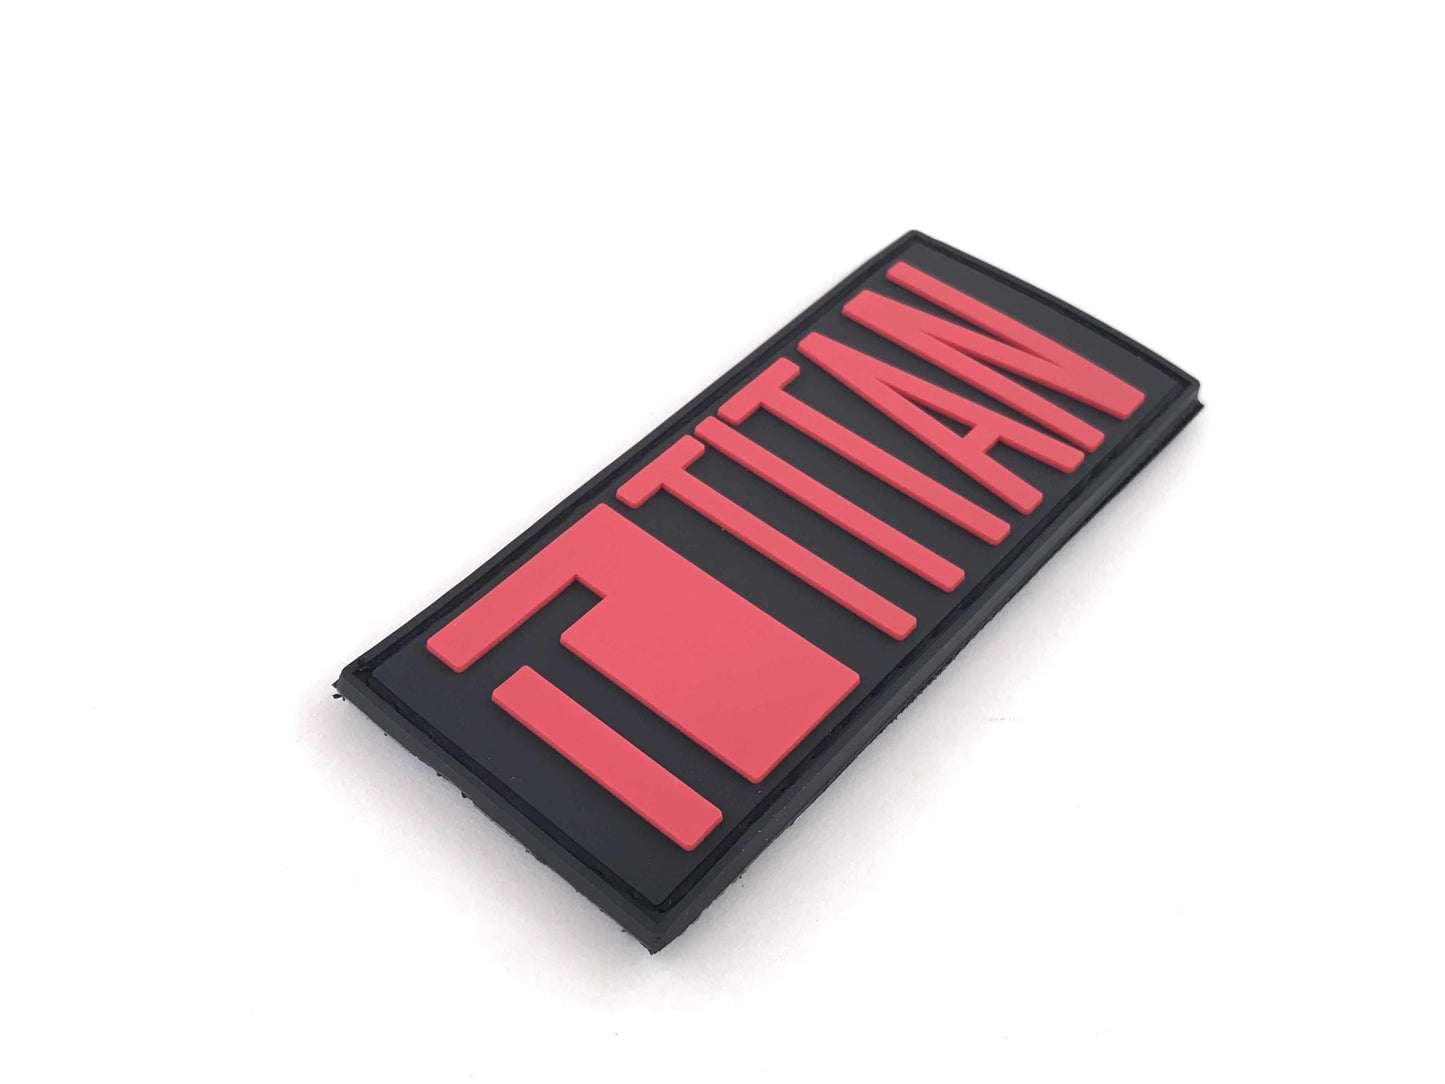 Titan Power PVC Velcro Patch